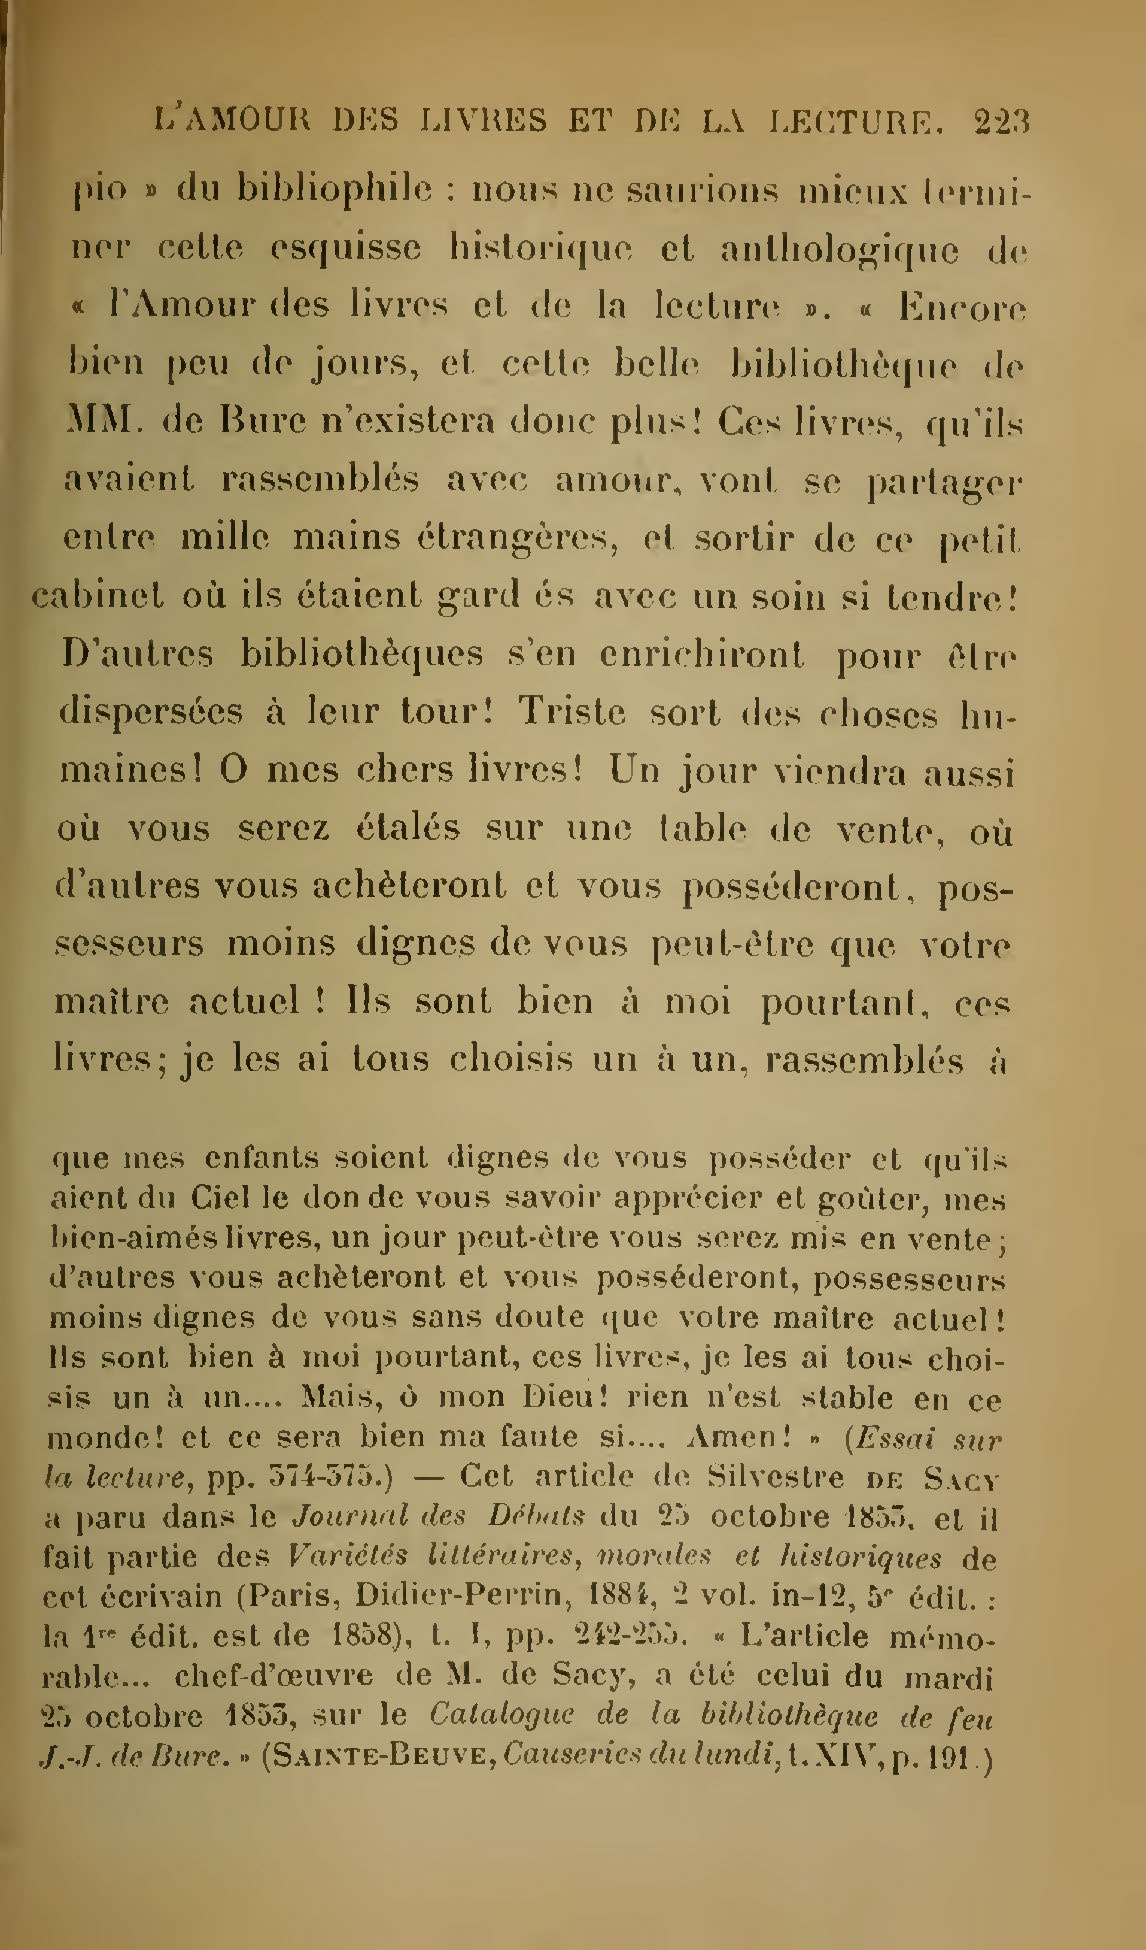 Albert Cim, Le Livre, t. I, p. 223.